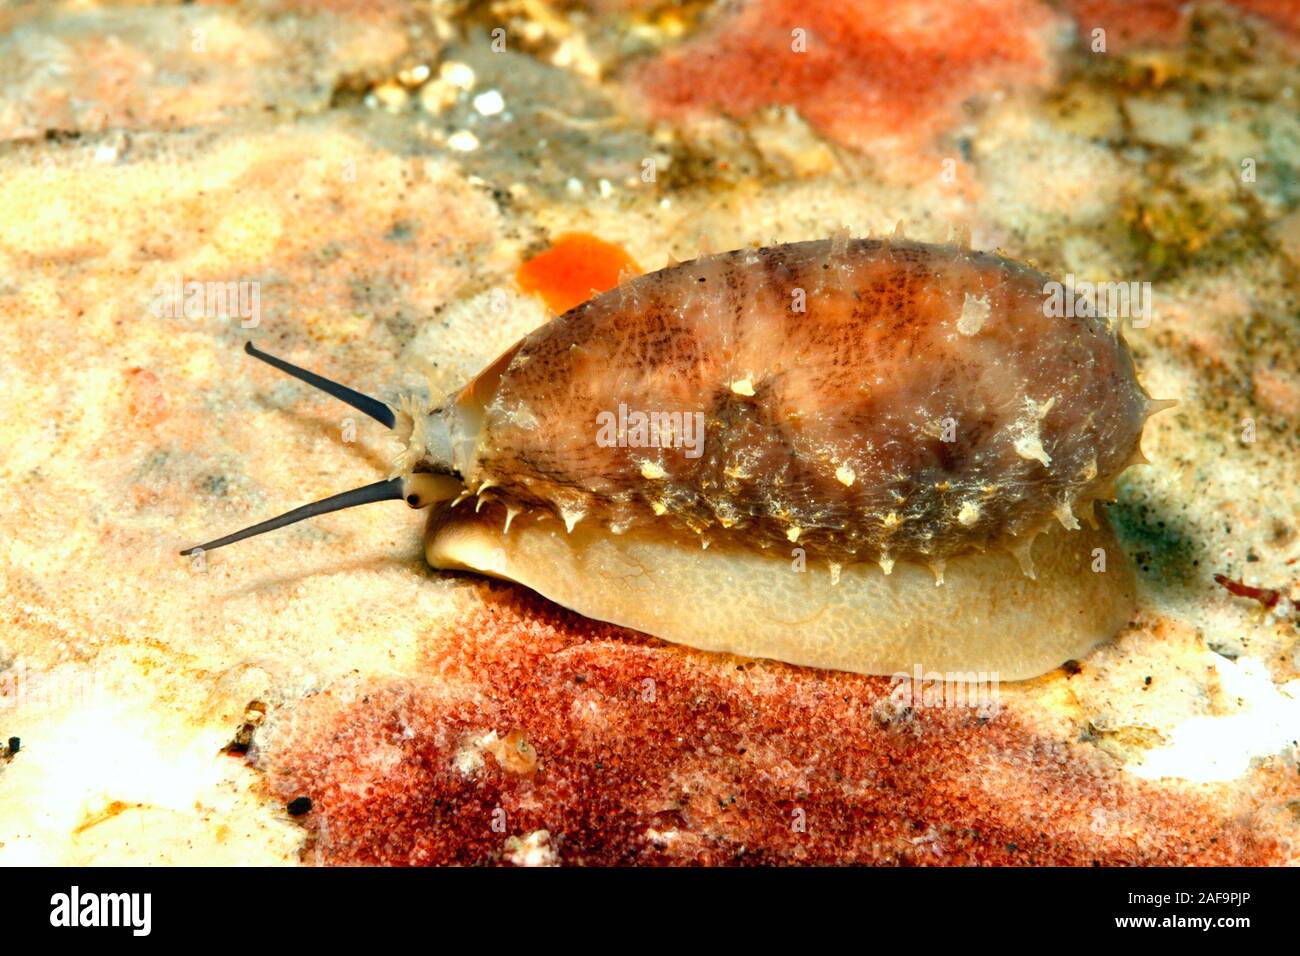 Cowry Shell, Lyncina Cypraea carneola carneola, zurück. Juvenile shell, Mantel, Siphon und Auge. Tulamben, Bali, Indonesien. Stockfoto